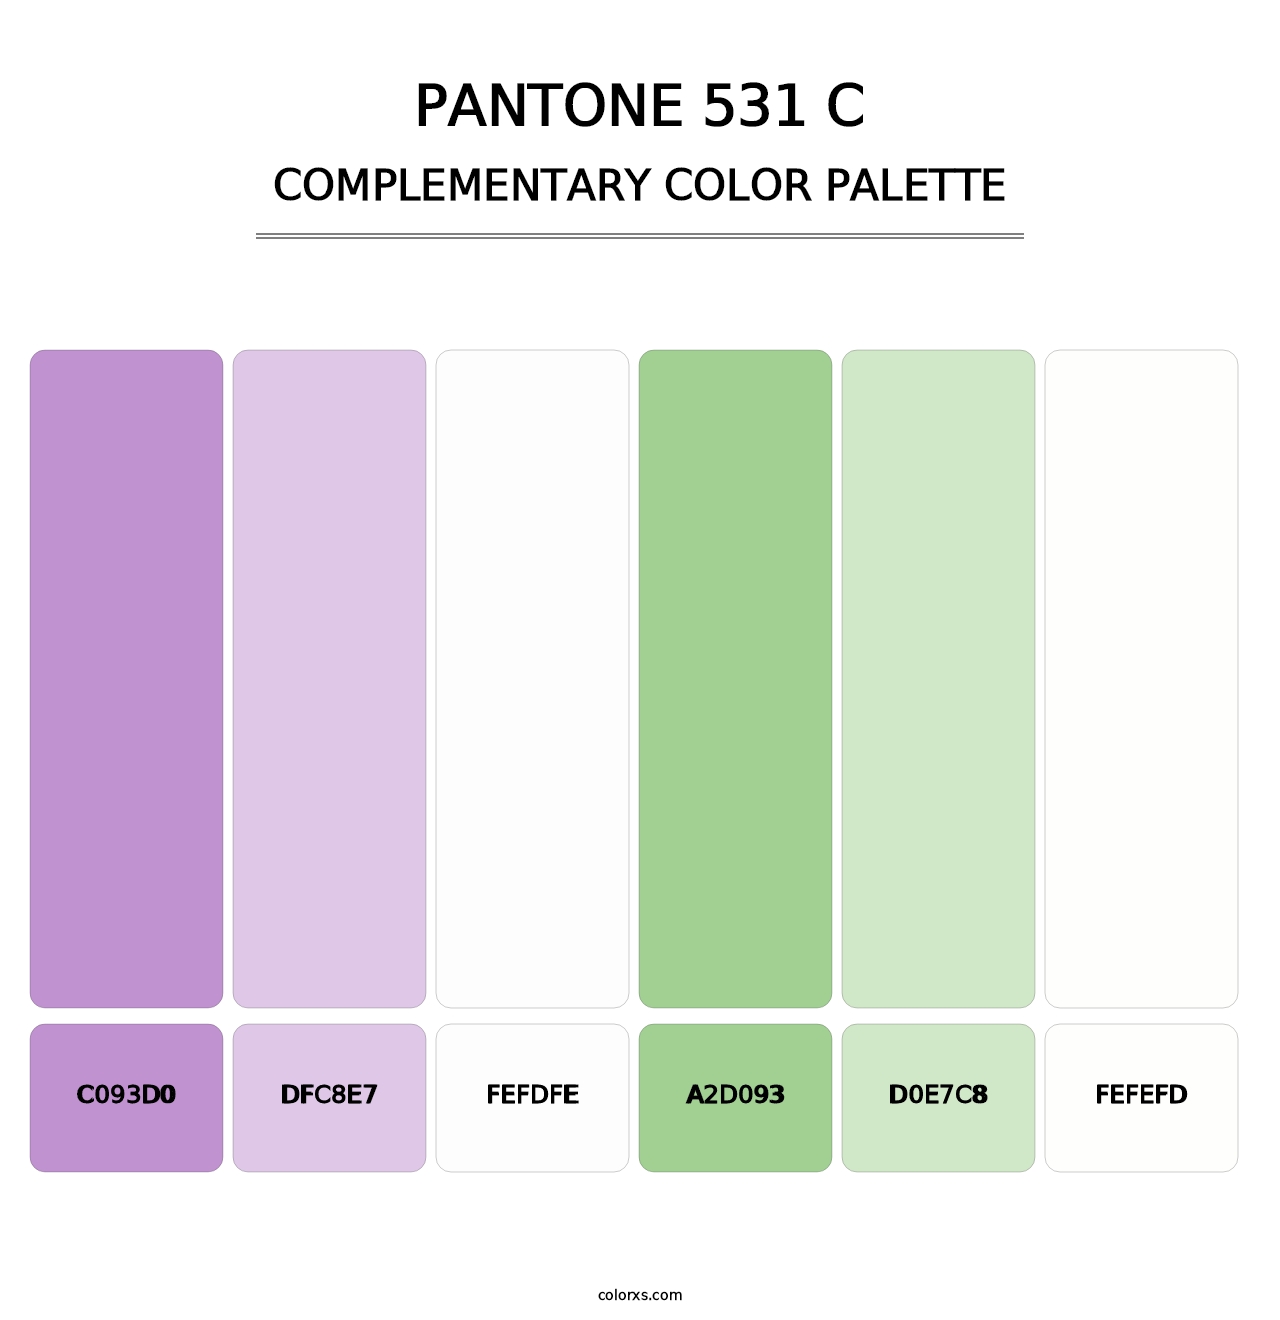 PANTONE 531 C - Complementary Color Palette